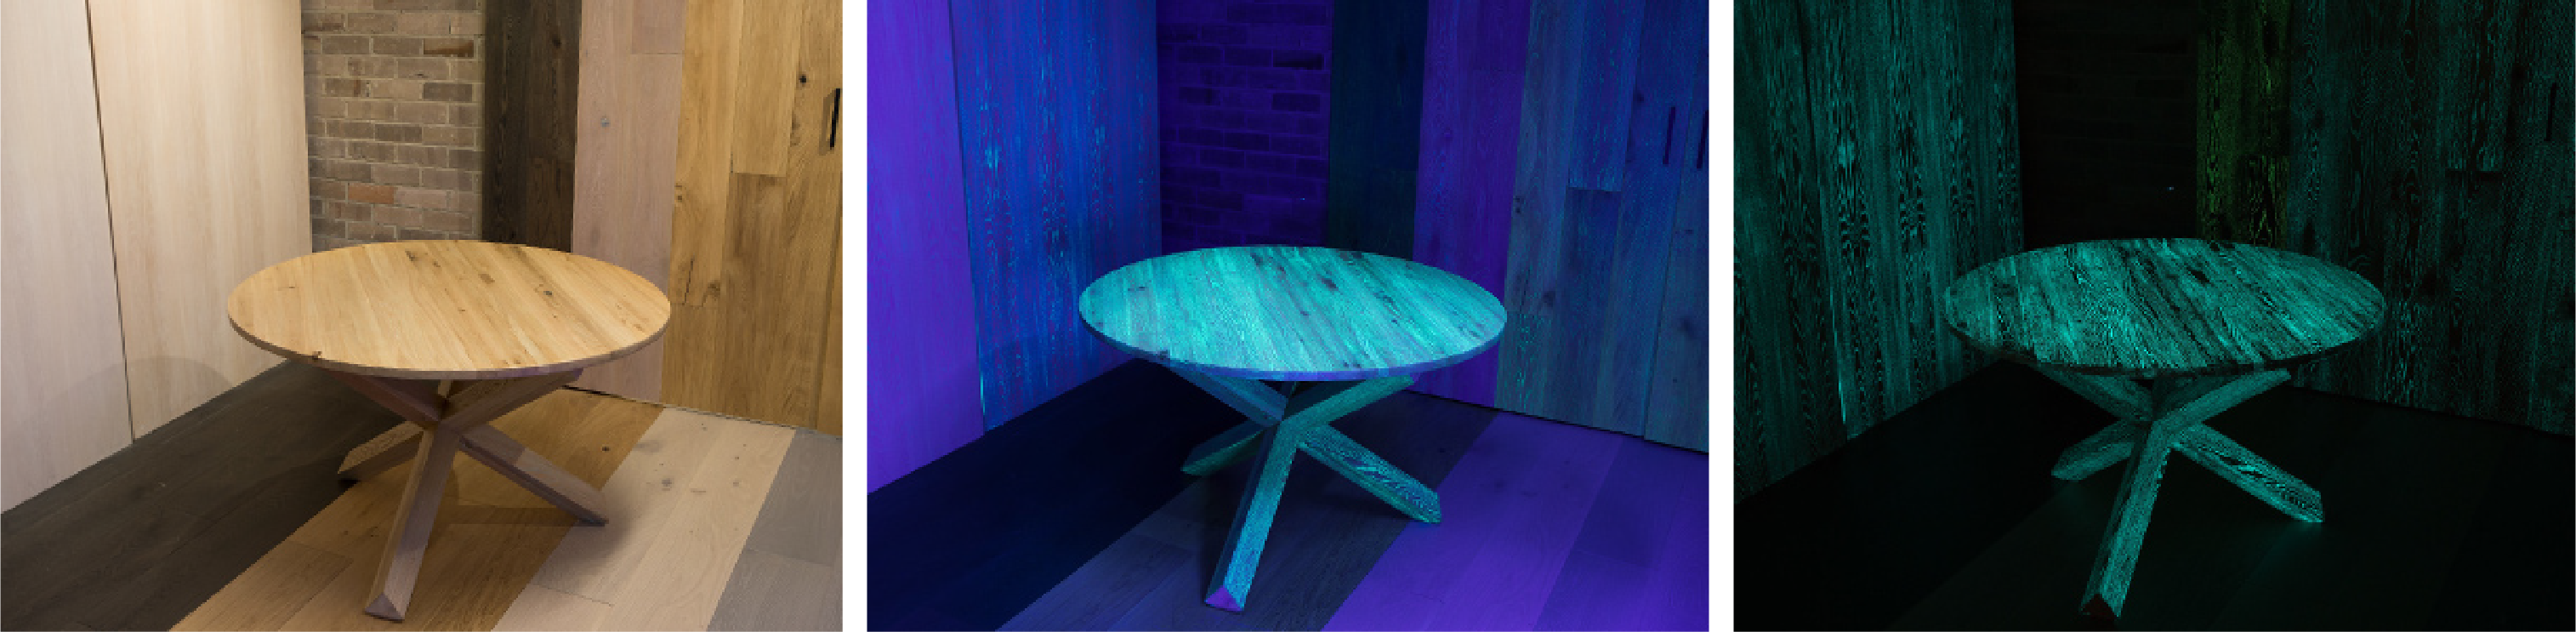 Round oak Glowood Table